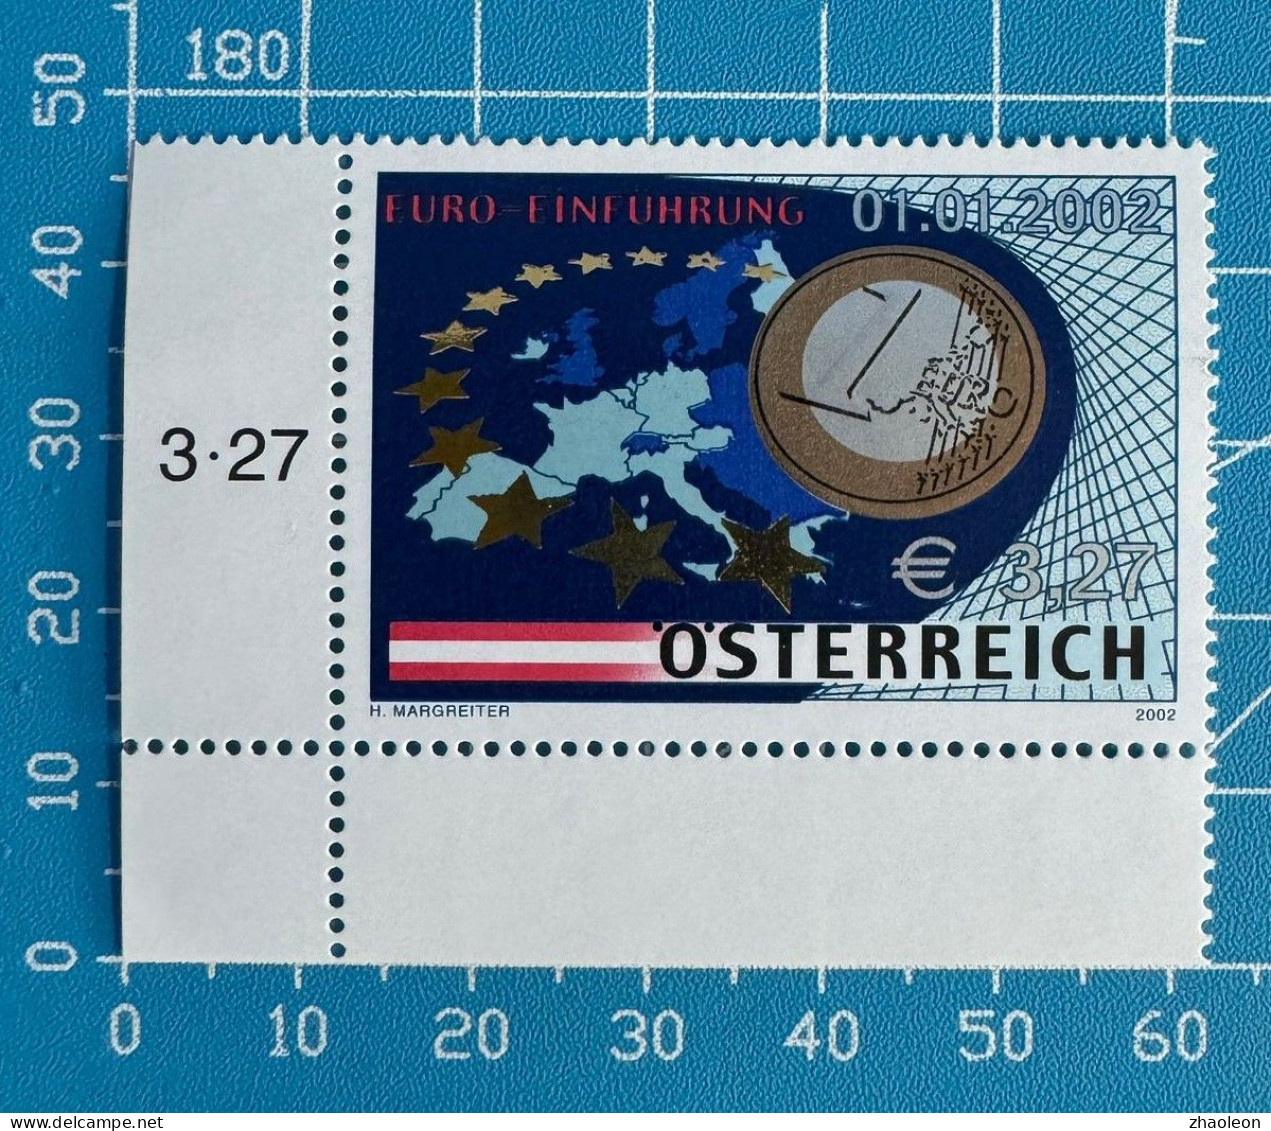 EURO-Einführung/ EURO Introduction Austria 2368 - Unused Stamps